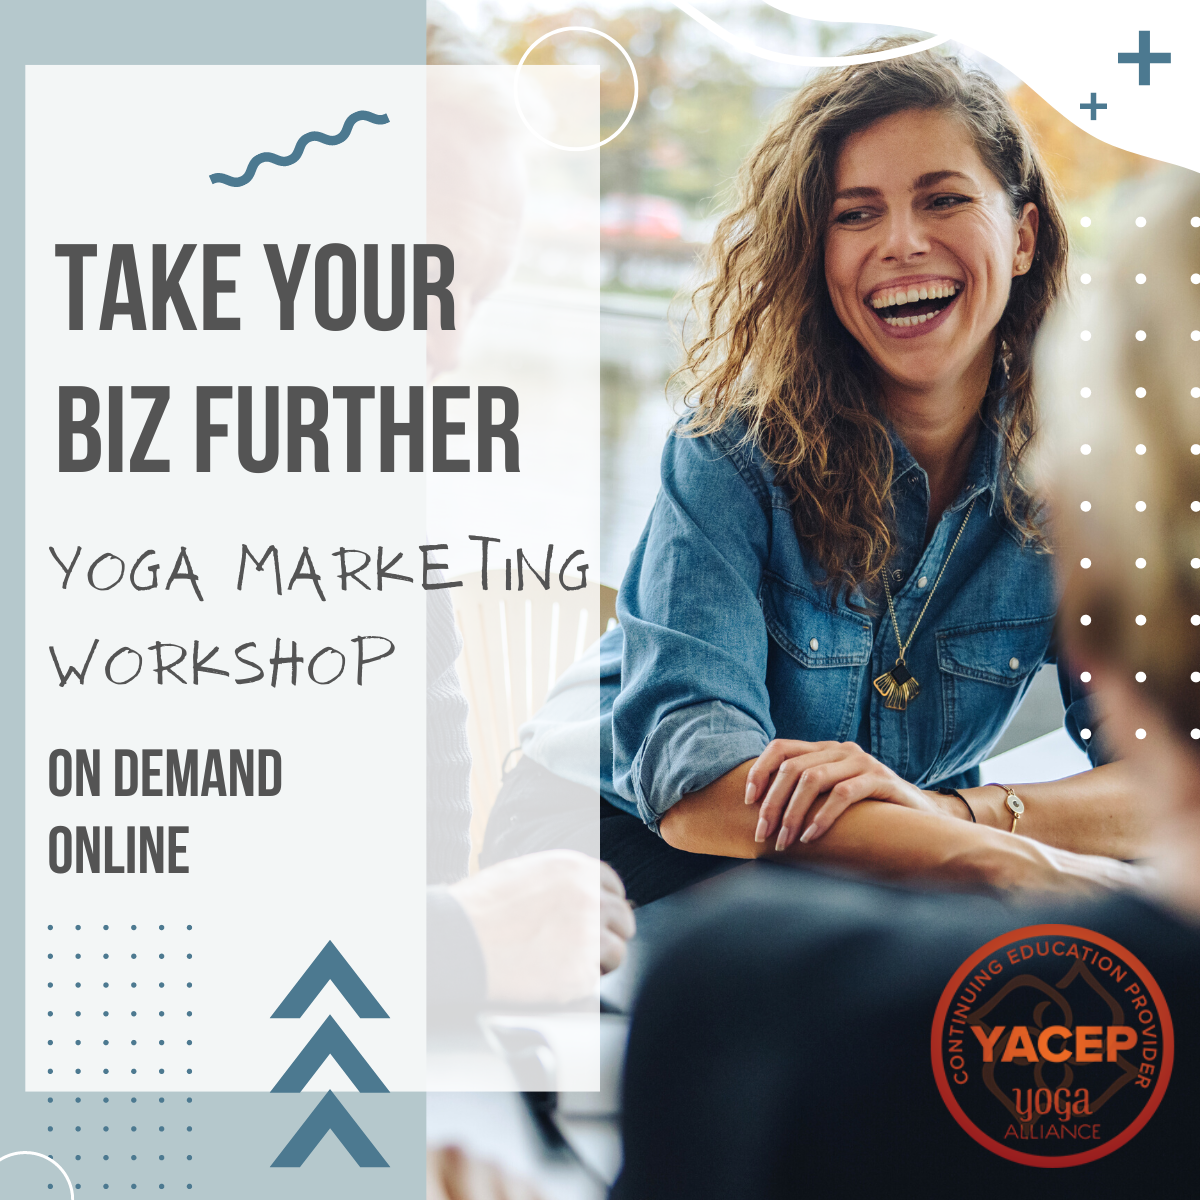 Yoga Marketing Workshop: Branding, SEO, Social Media and more.